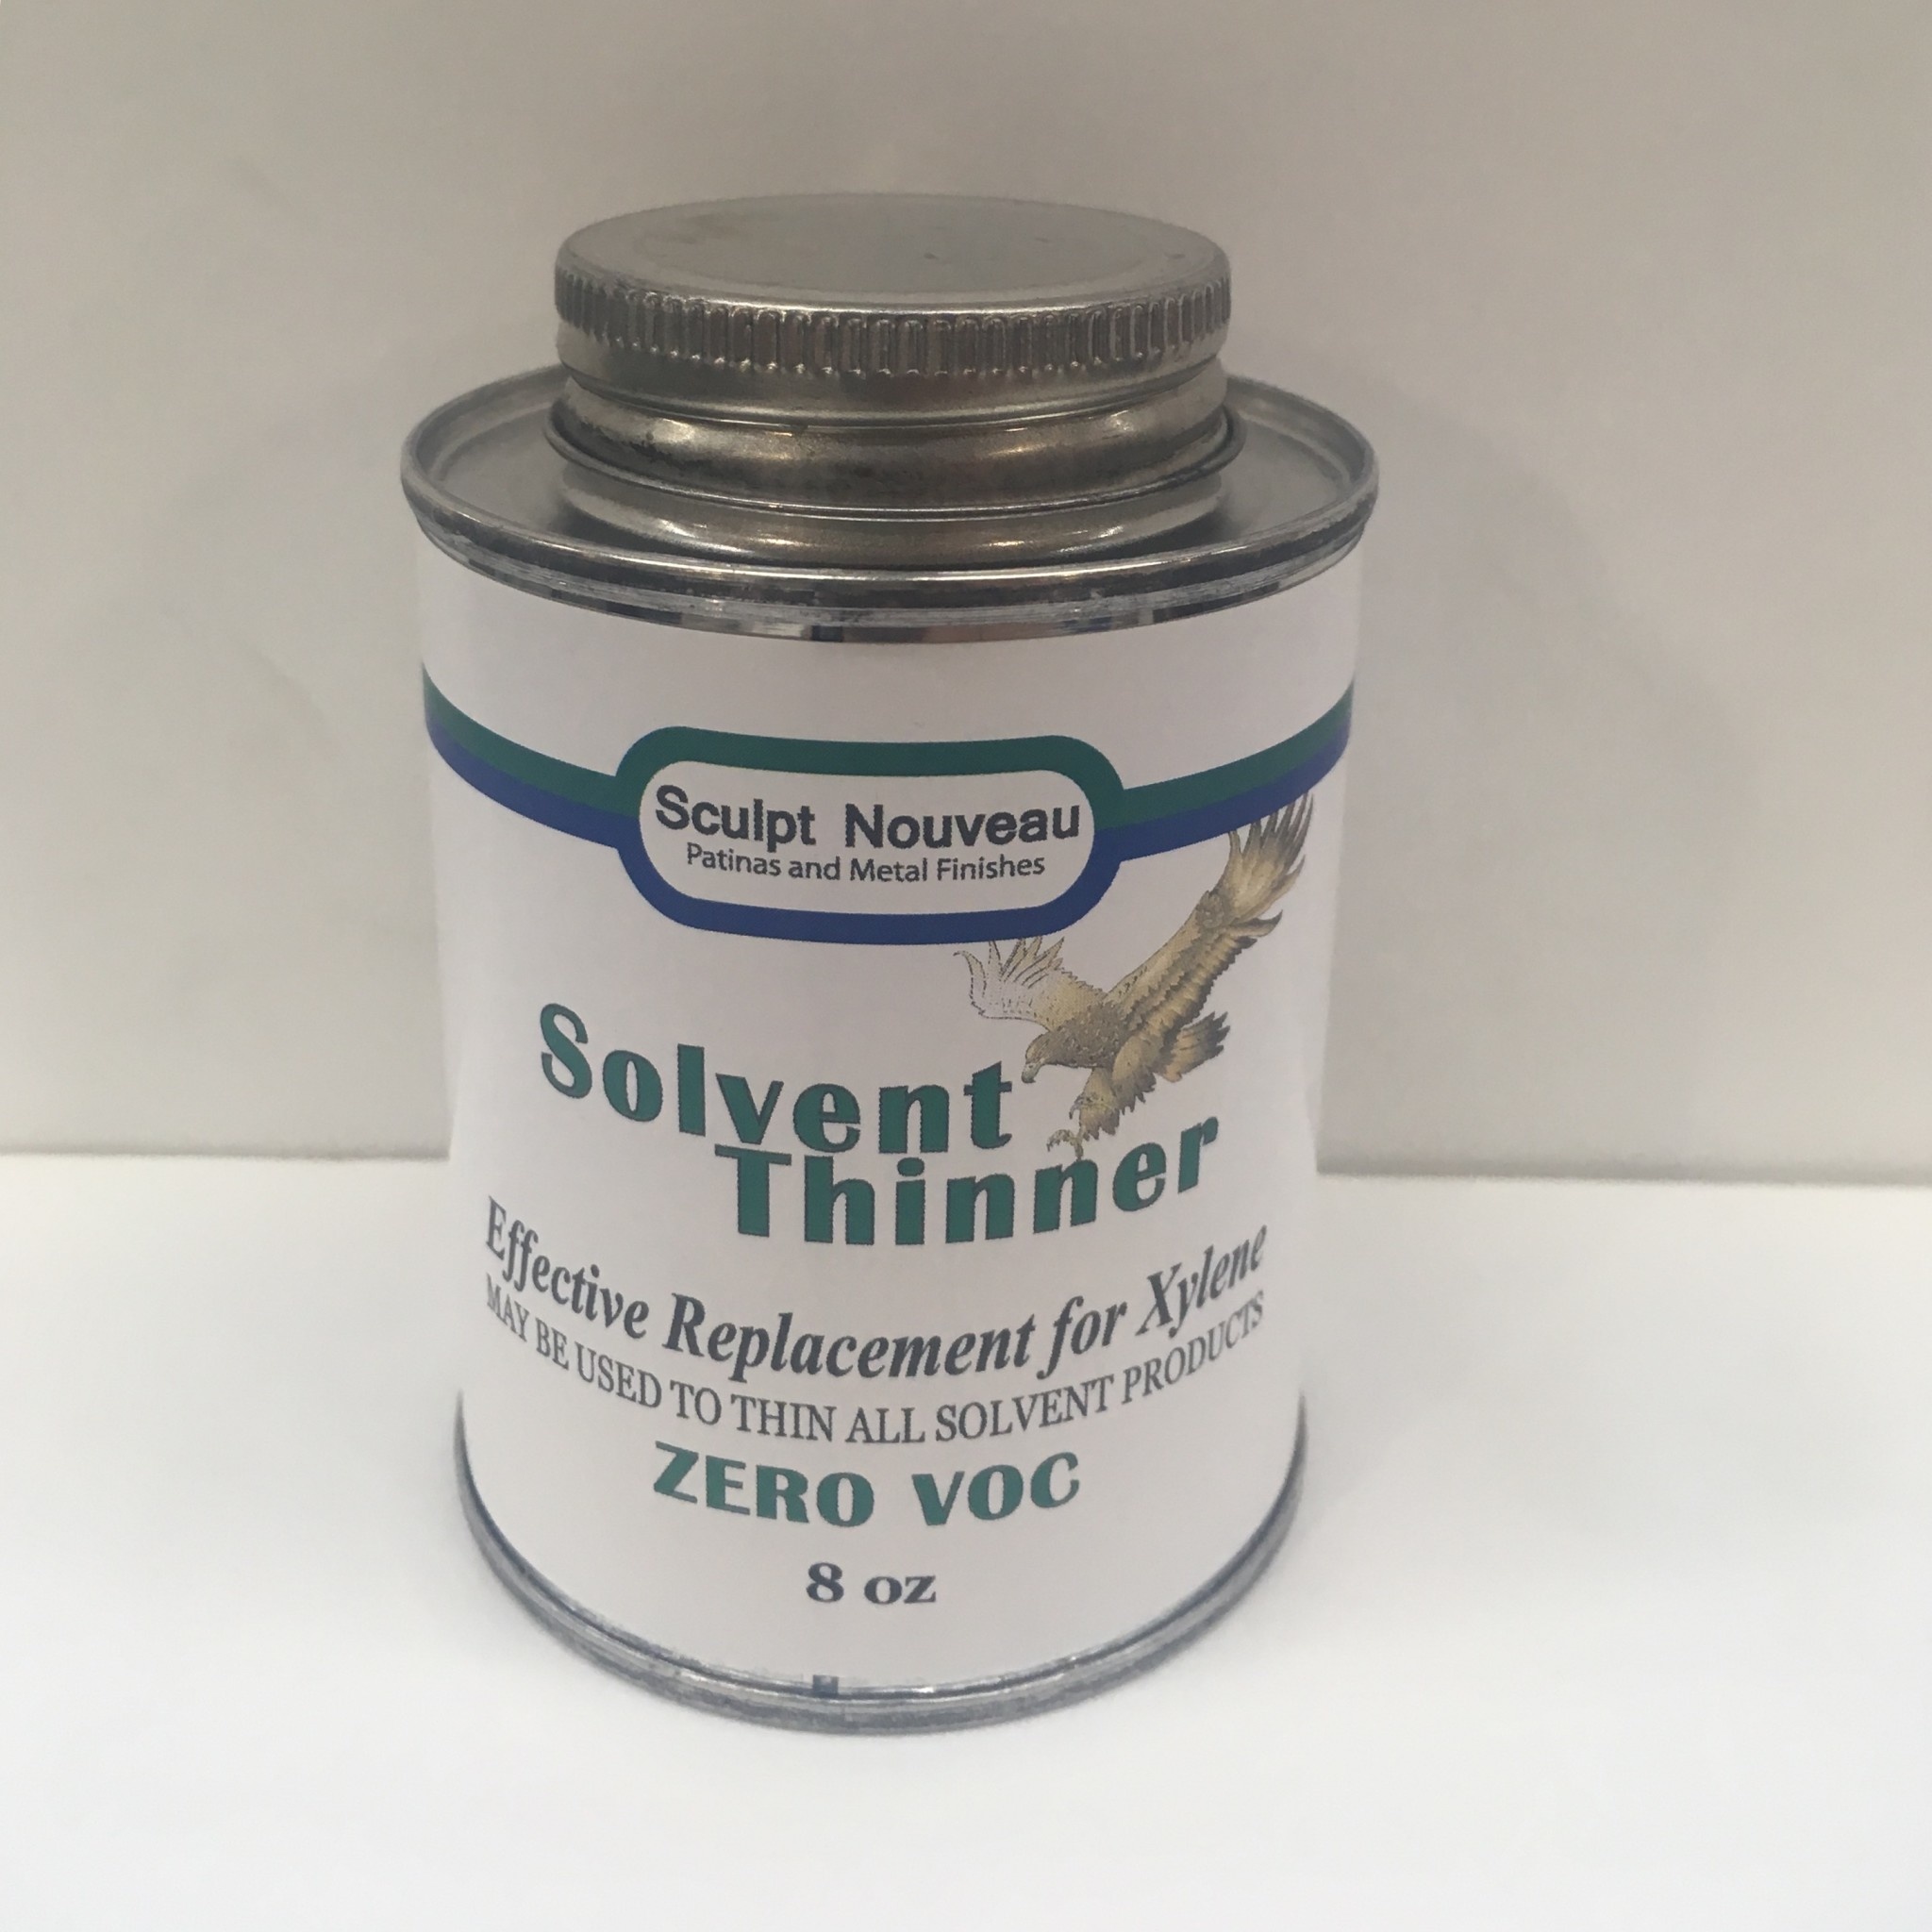 Solvent Thinner 8oz -Zero VOC- - The Compleat Sculptor